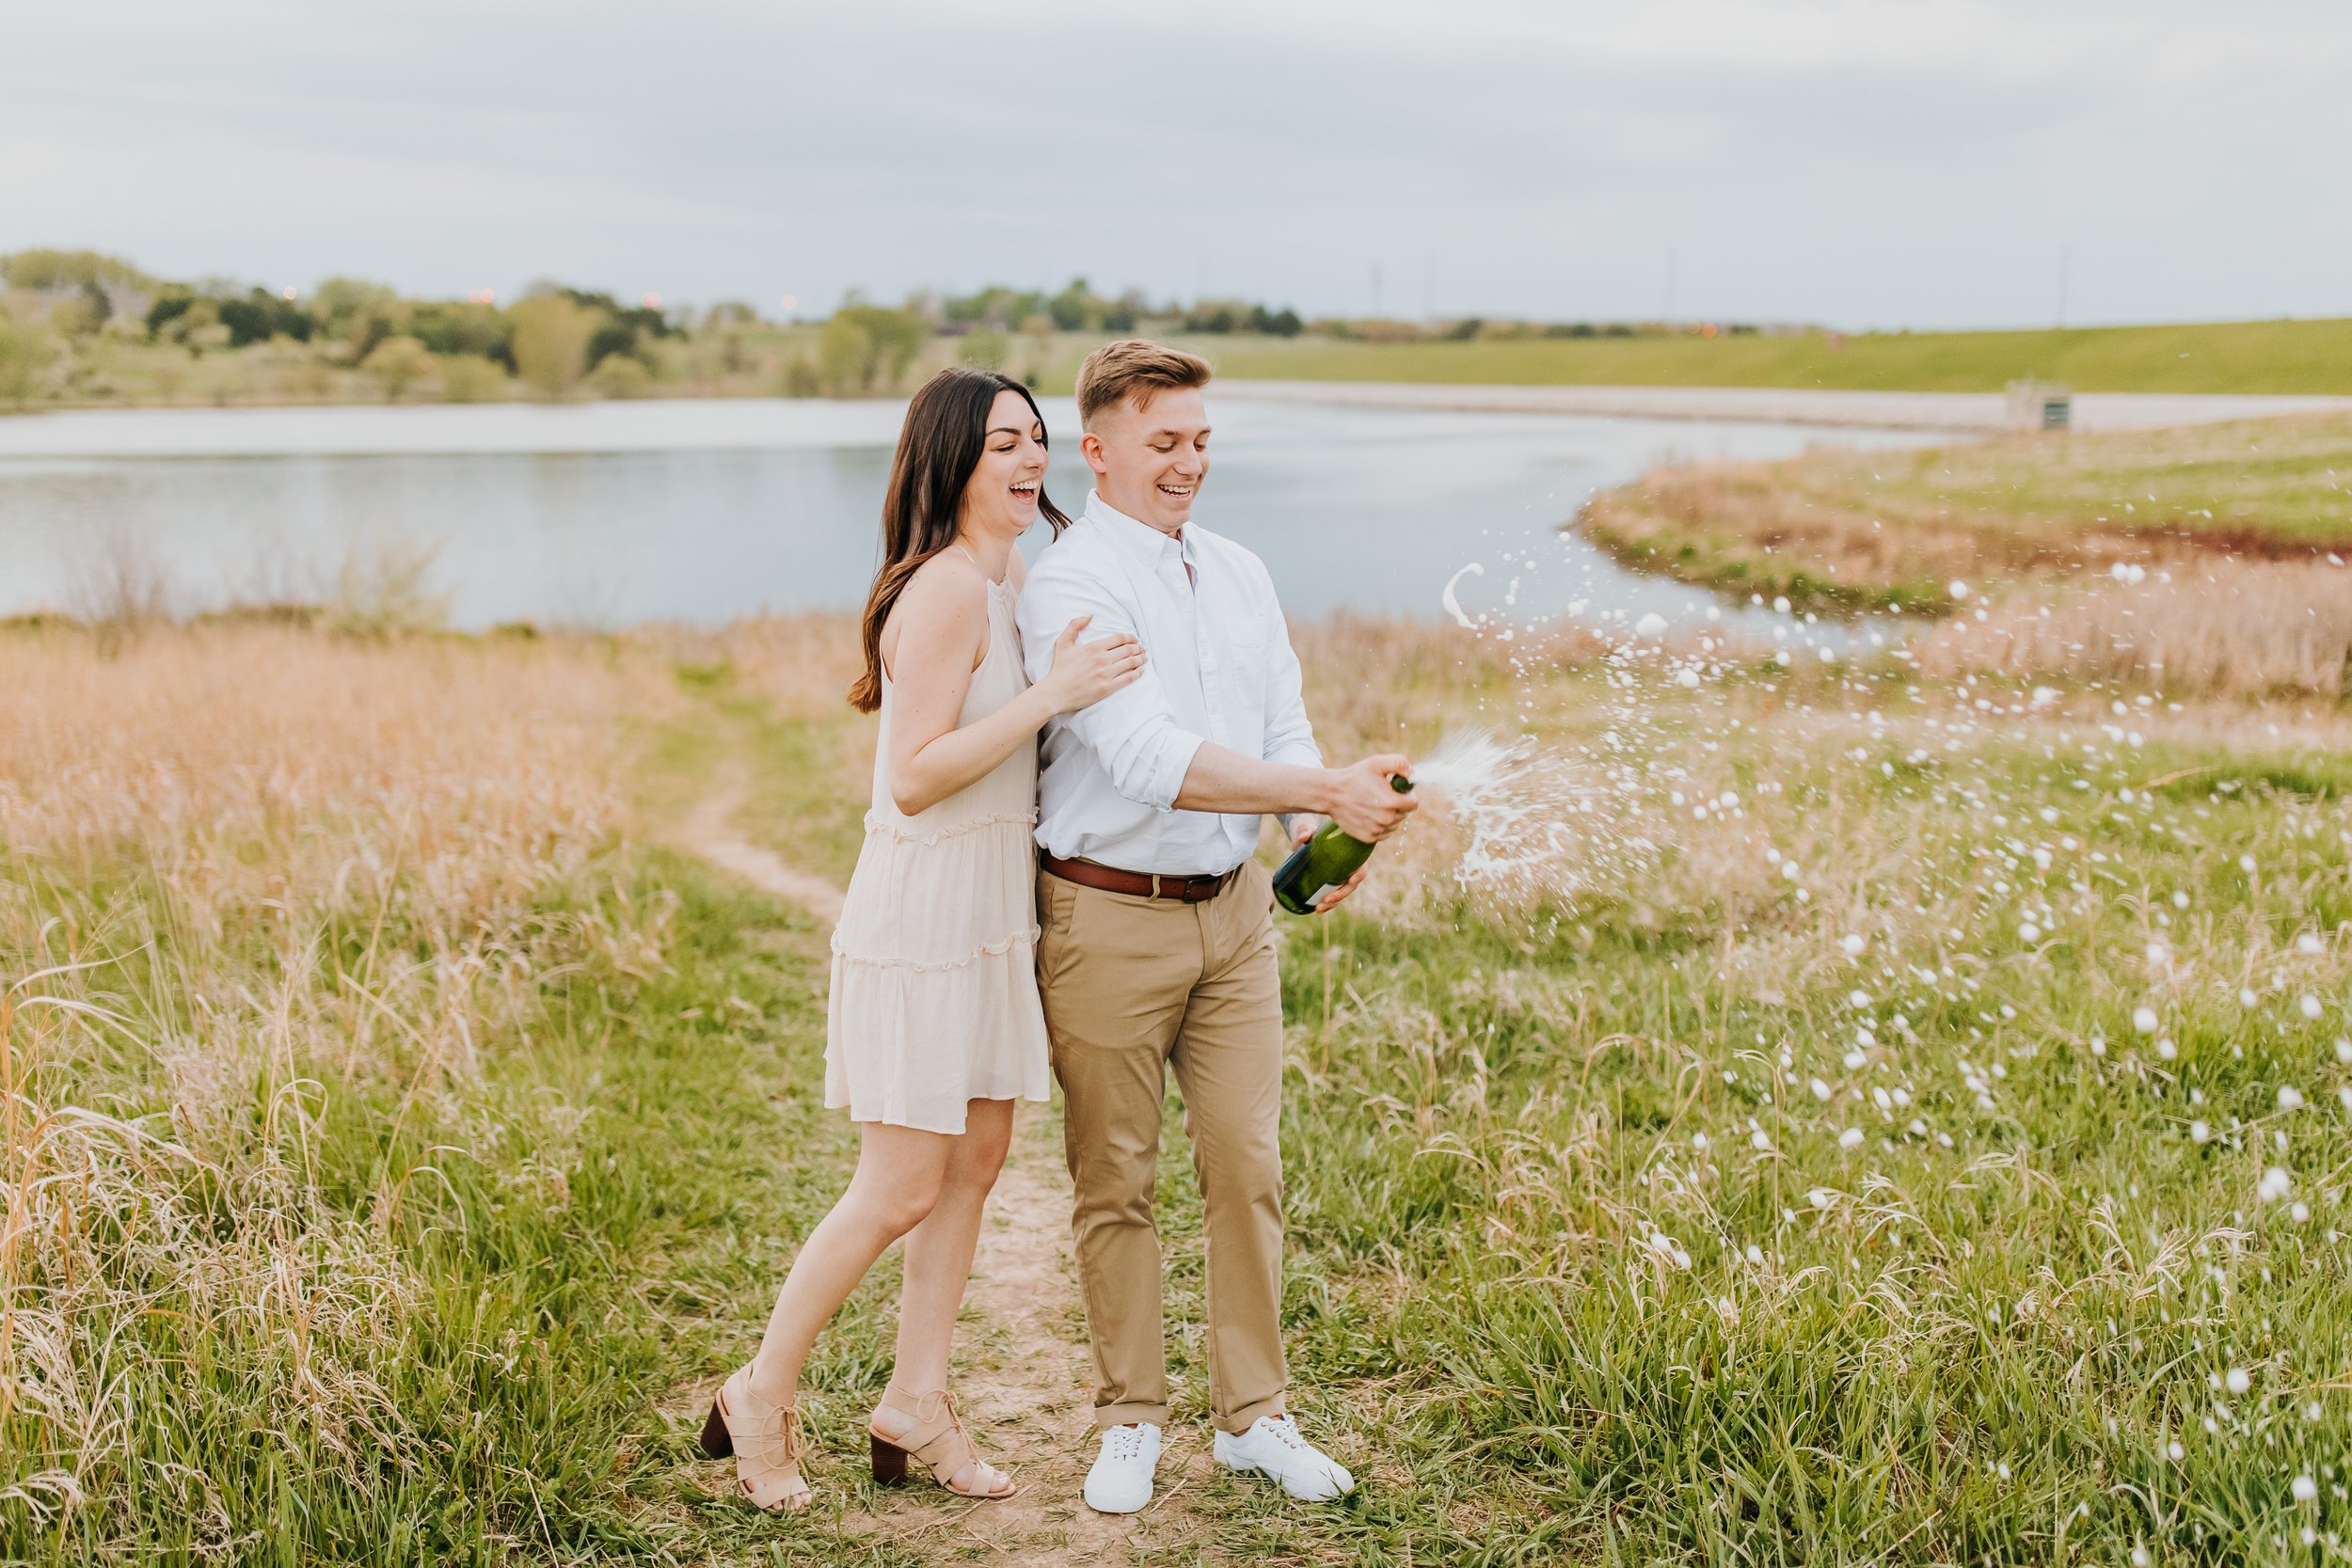 Allison & Liam - Engaged - Nathaniel Jensen Photography - Omaha Nebraska Wedding Photographer-142.jpg